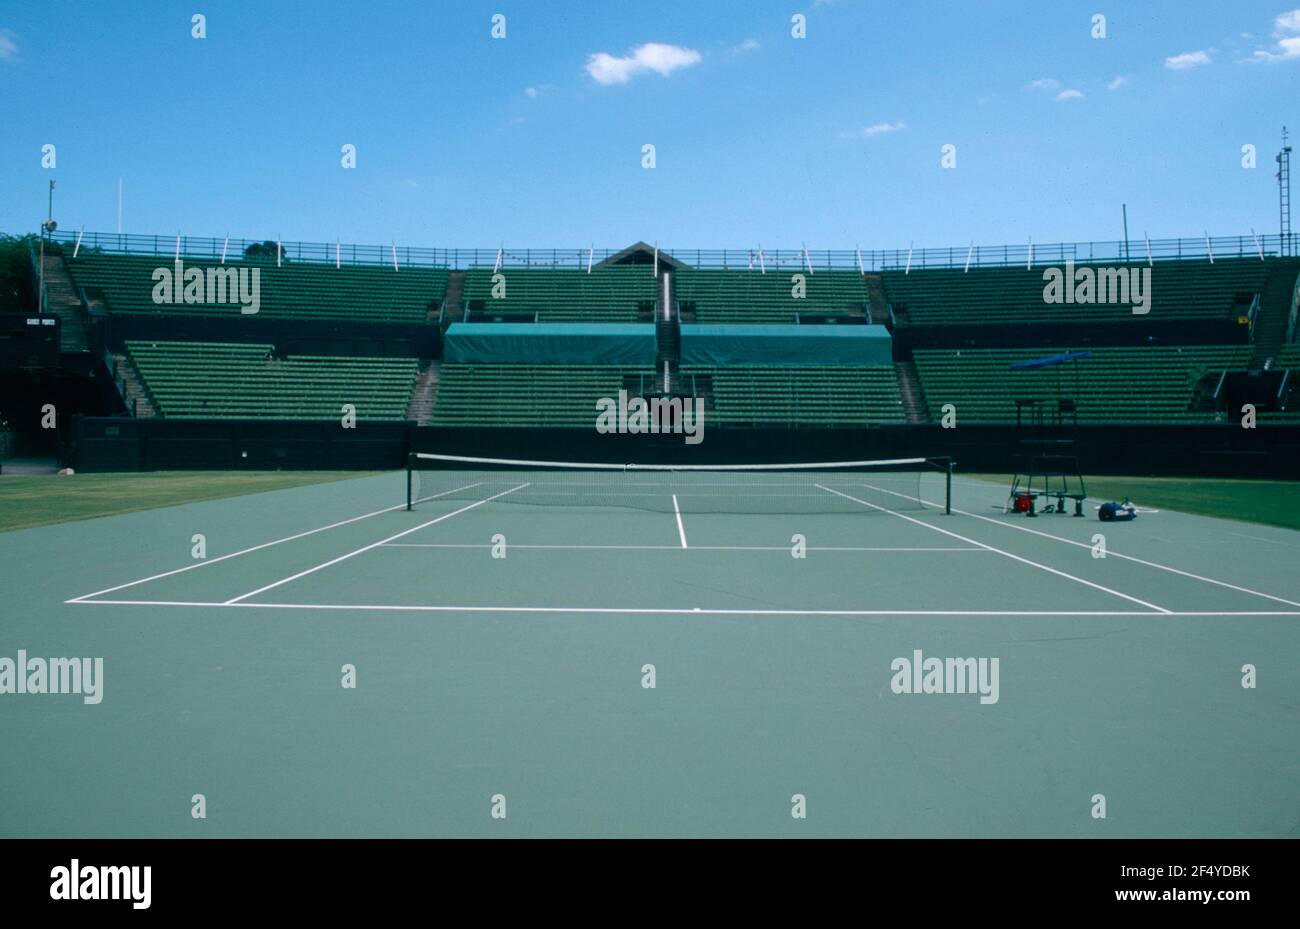 Central tennis court at the Davis Cup, Kooyong Tennis Club, Australia 2001 Stock Photo